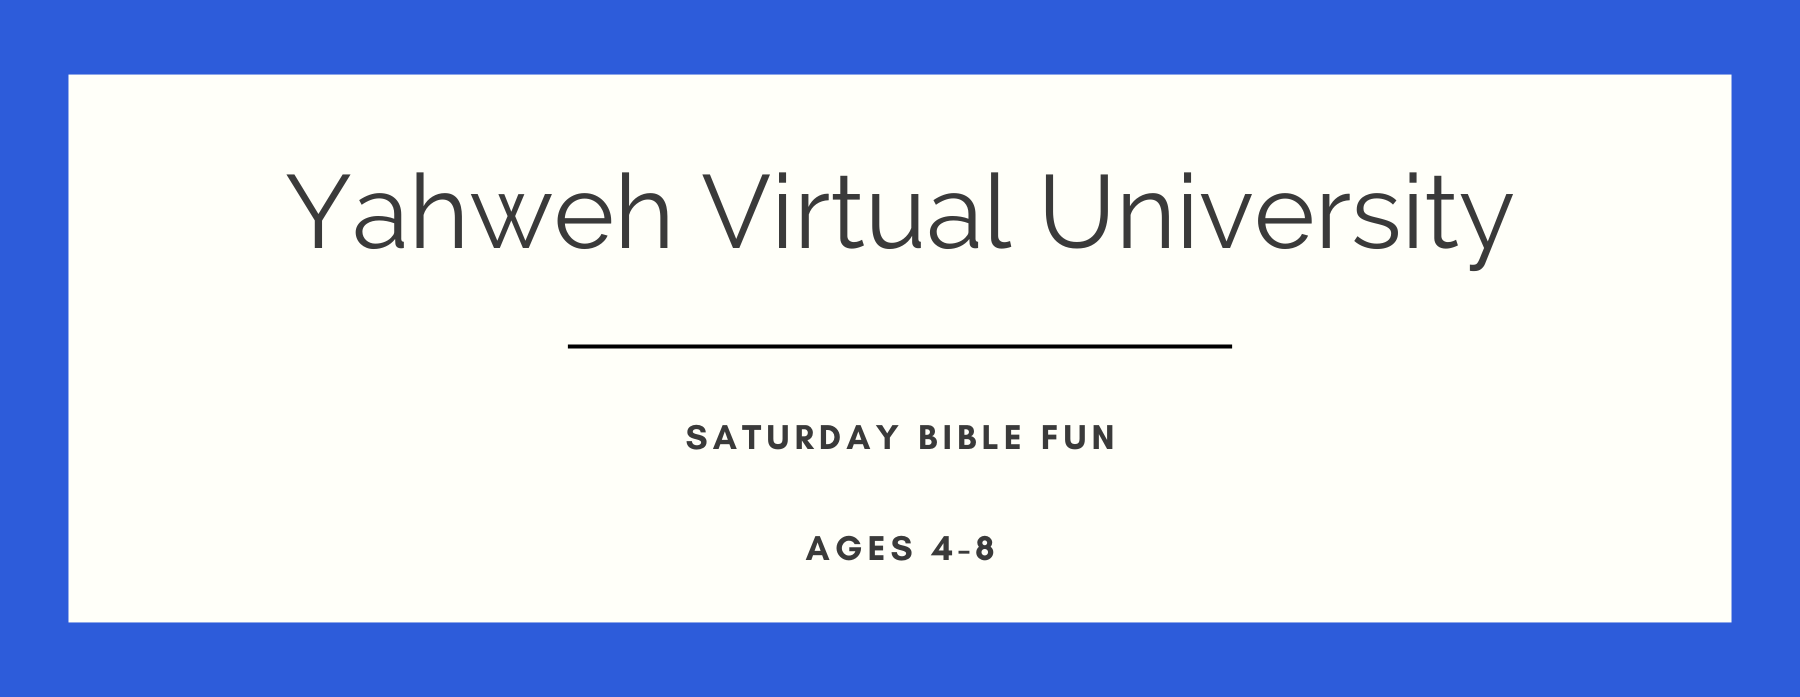 Yahweh Virtual University Saturday Bible Fun Ages 4-8